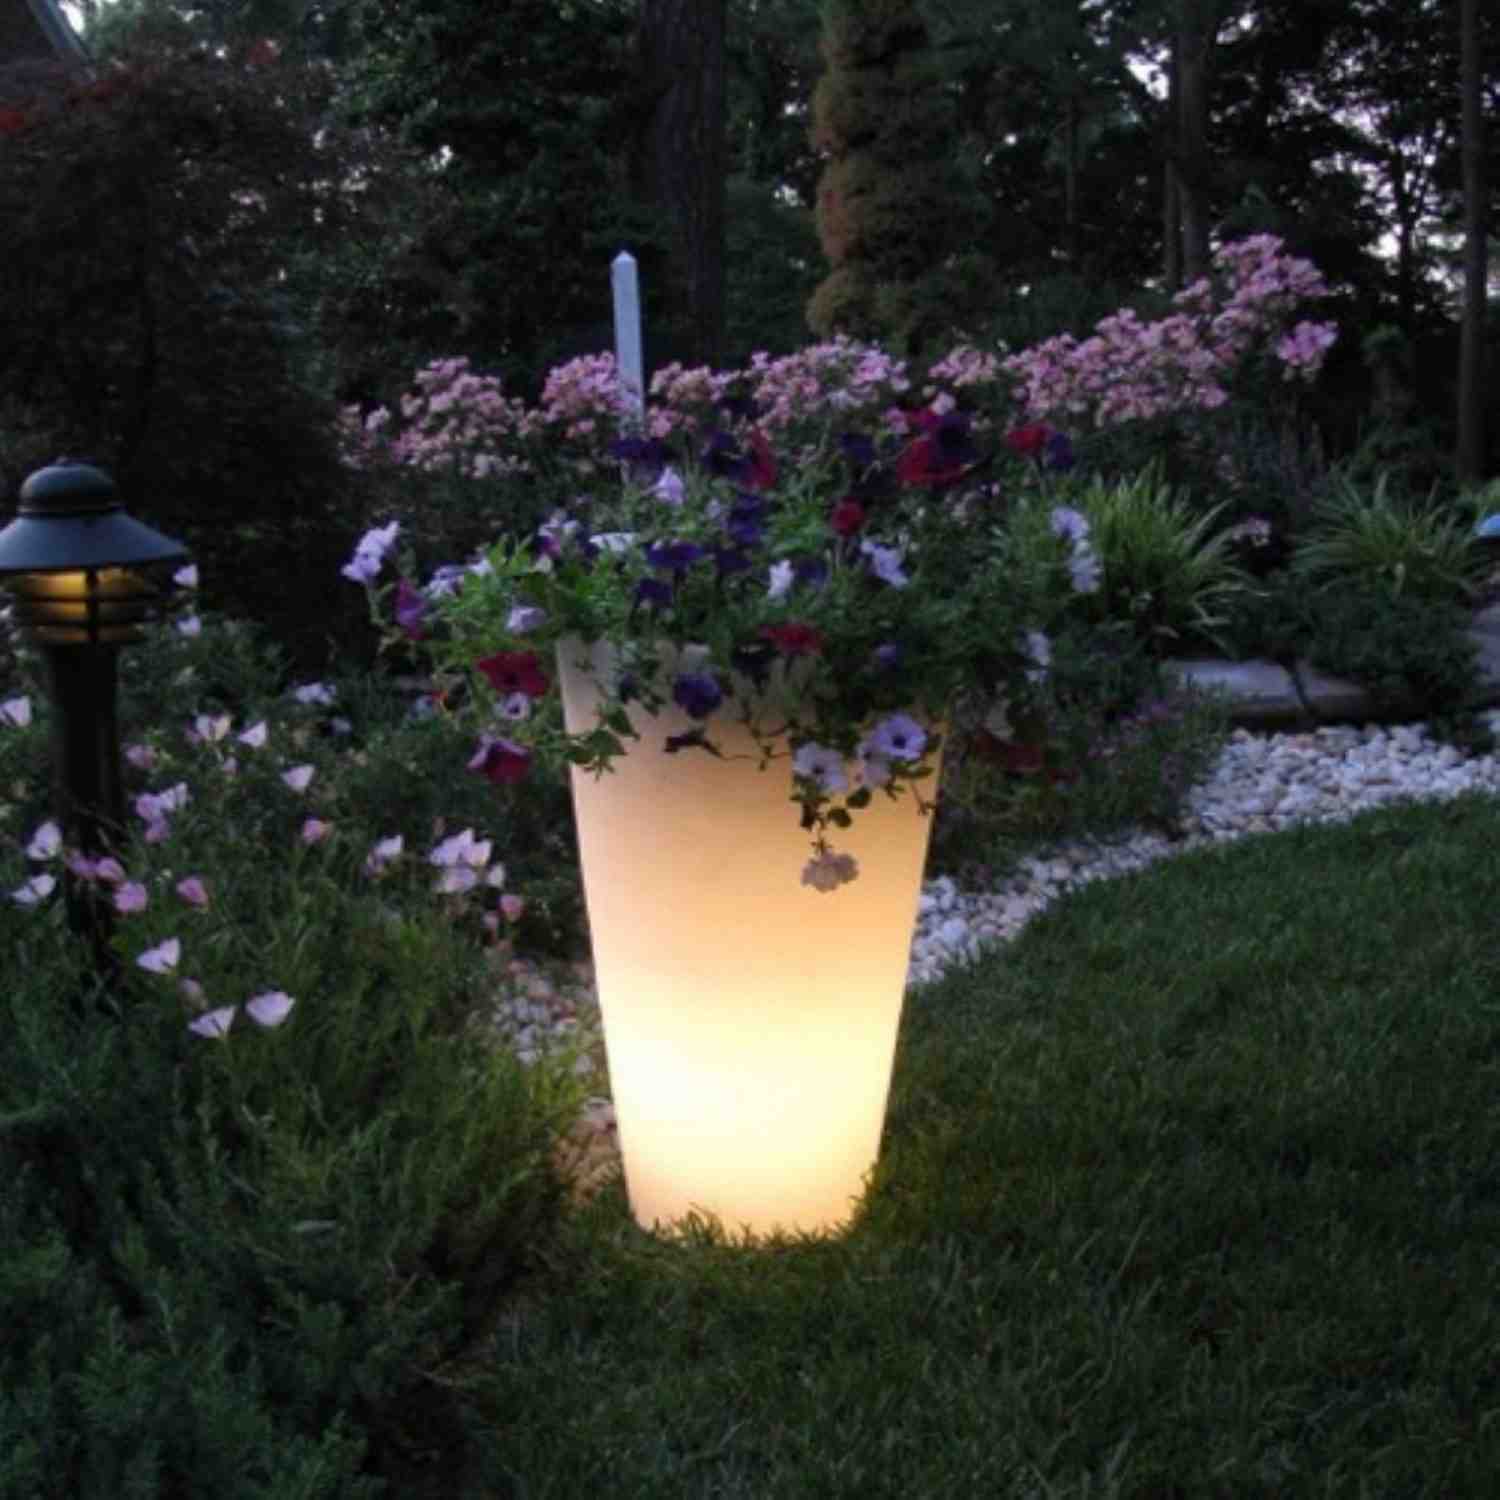 DIY Glow in the Dark Flower Pots